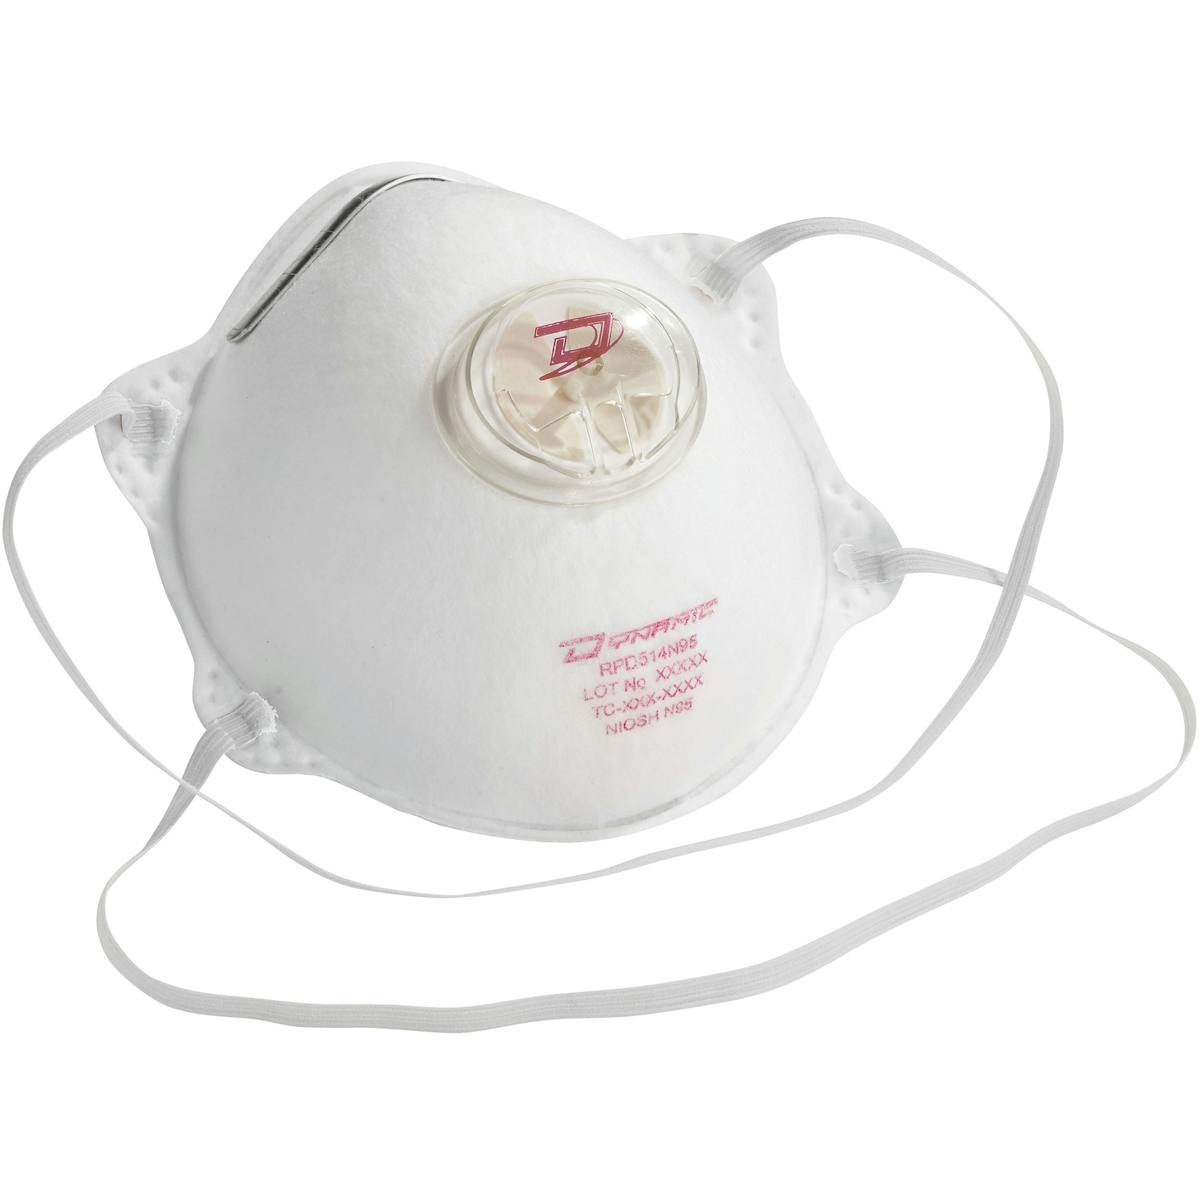 Standard N95 Disposable Respirator - 10 Pack, White (270-RPD514N95) - OS_2